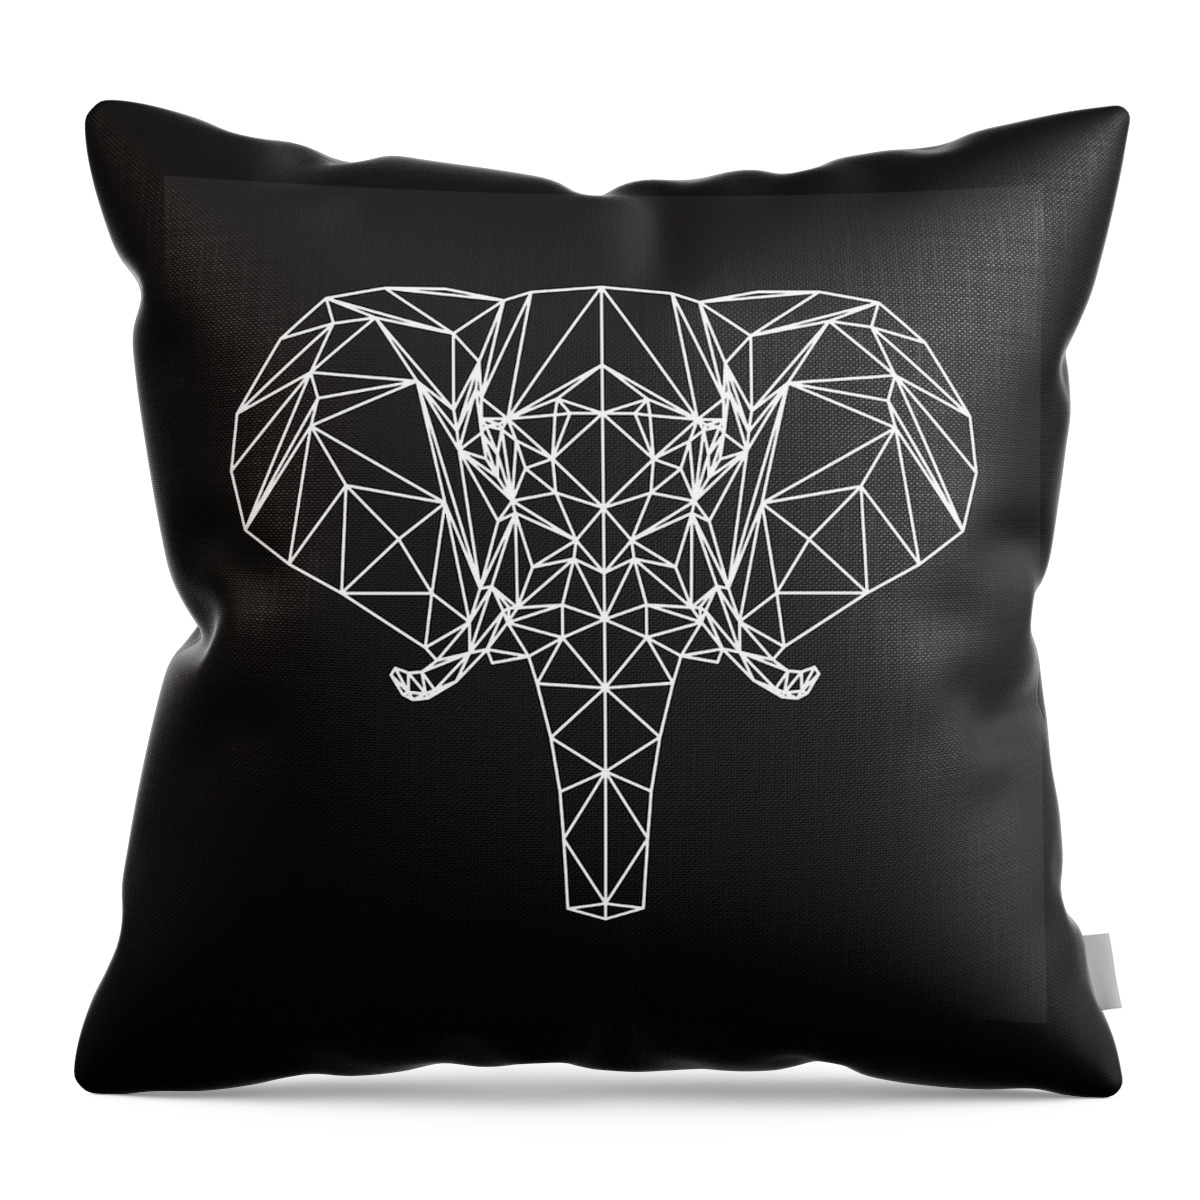 Elephant Throw Pillow featuring the digital art Night Elephant by Naxart Studio